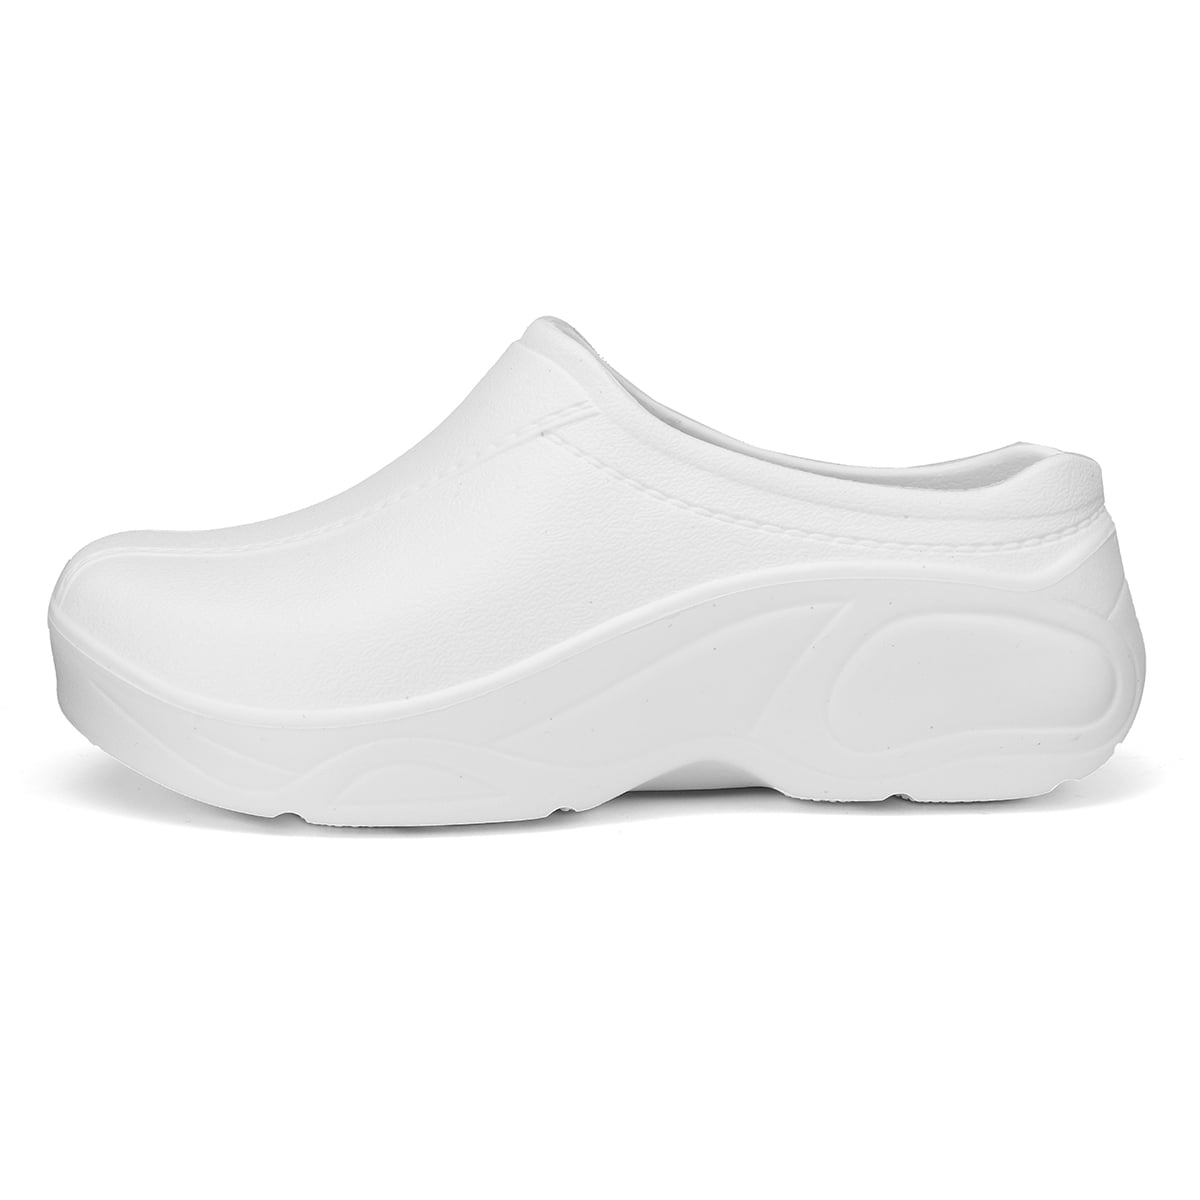 hawkwell women's lightweight comfort slip resistant nursing shoes